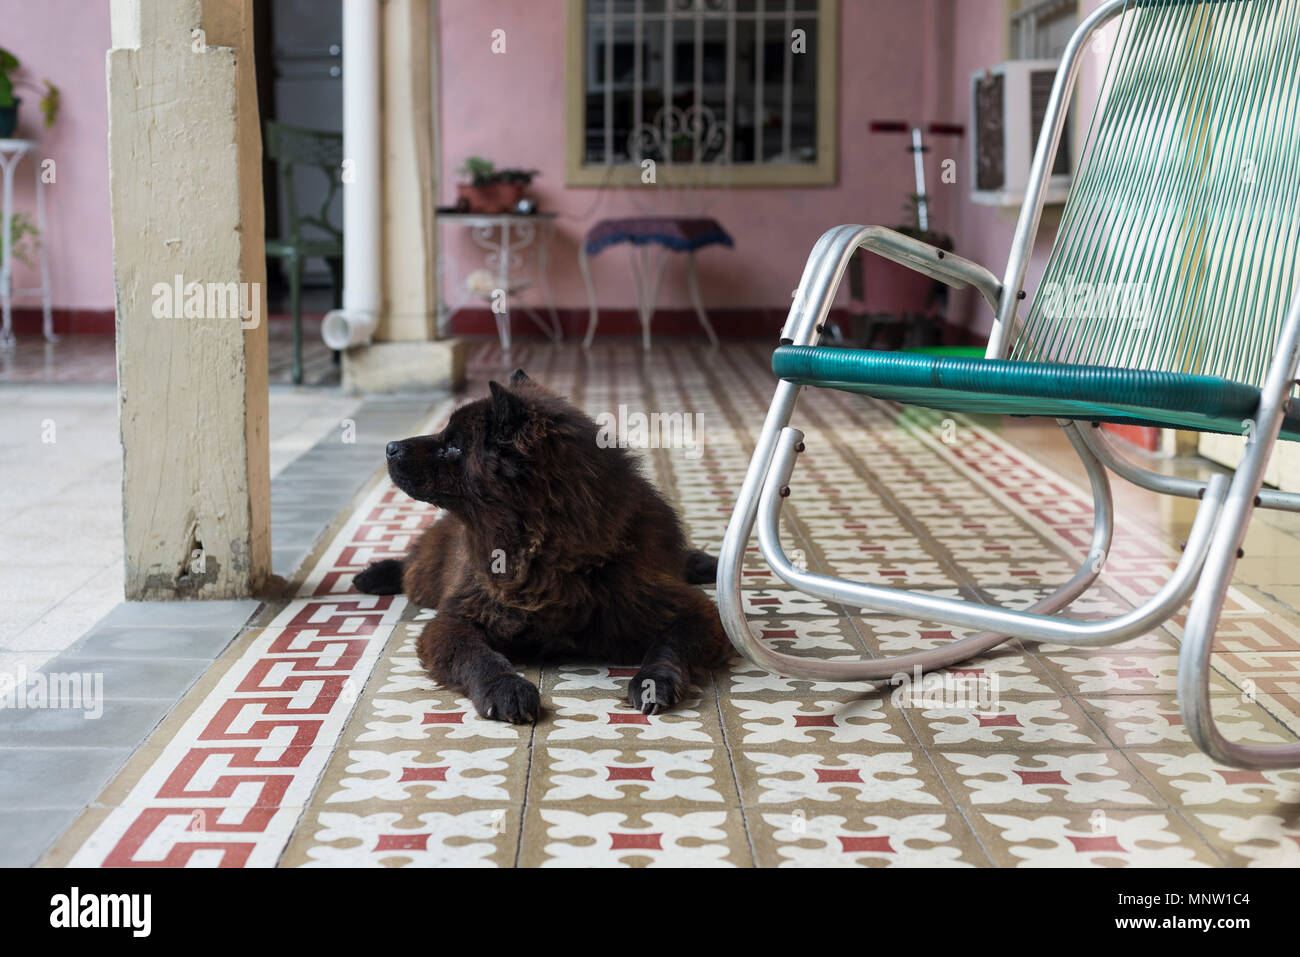 La casa de huéspedes de la mascota perro escalofriante en la veranda Foto de stock